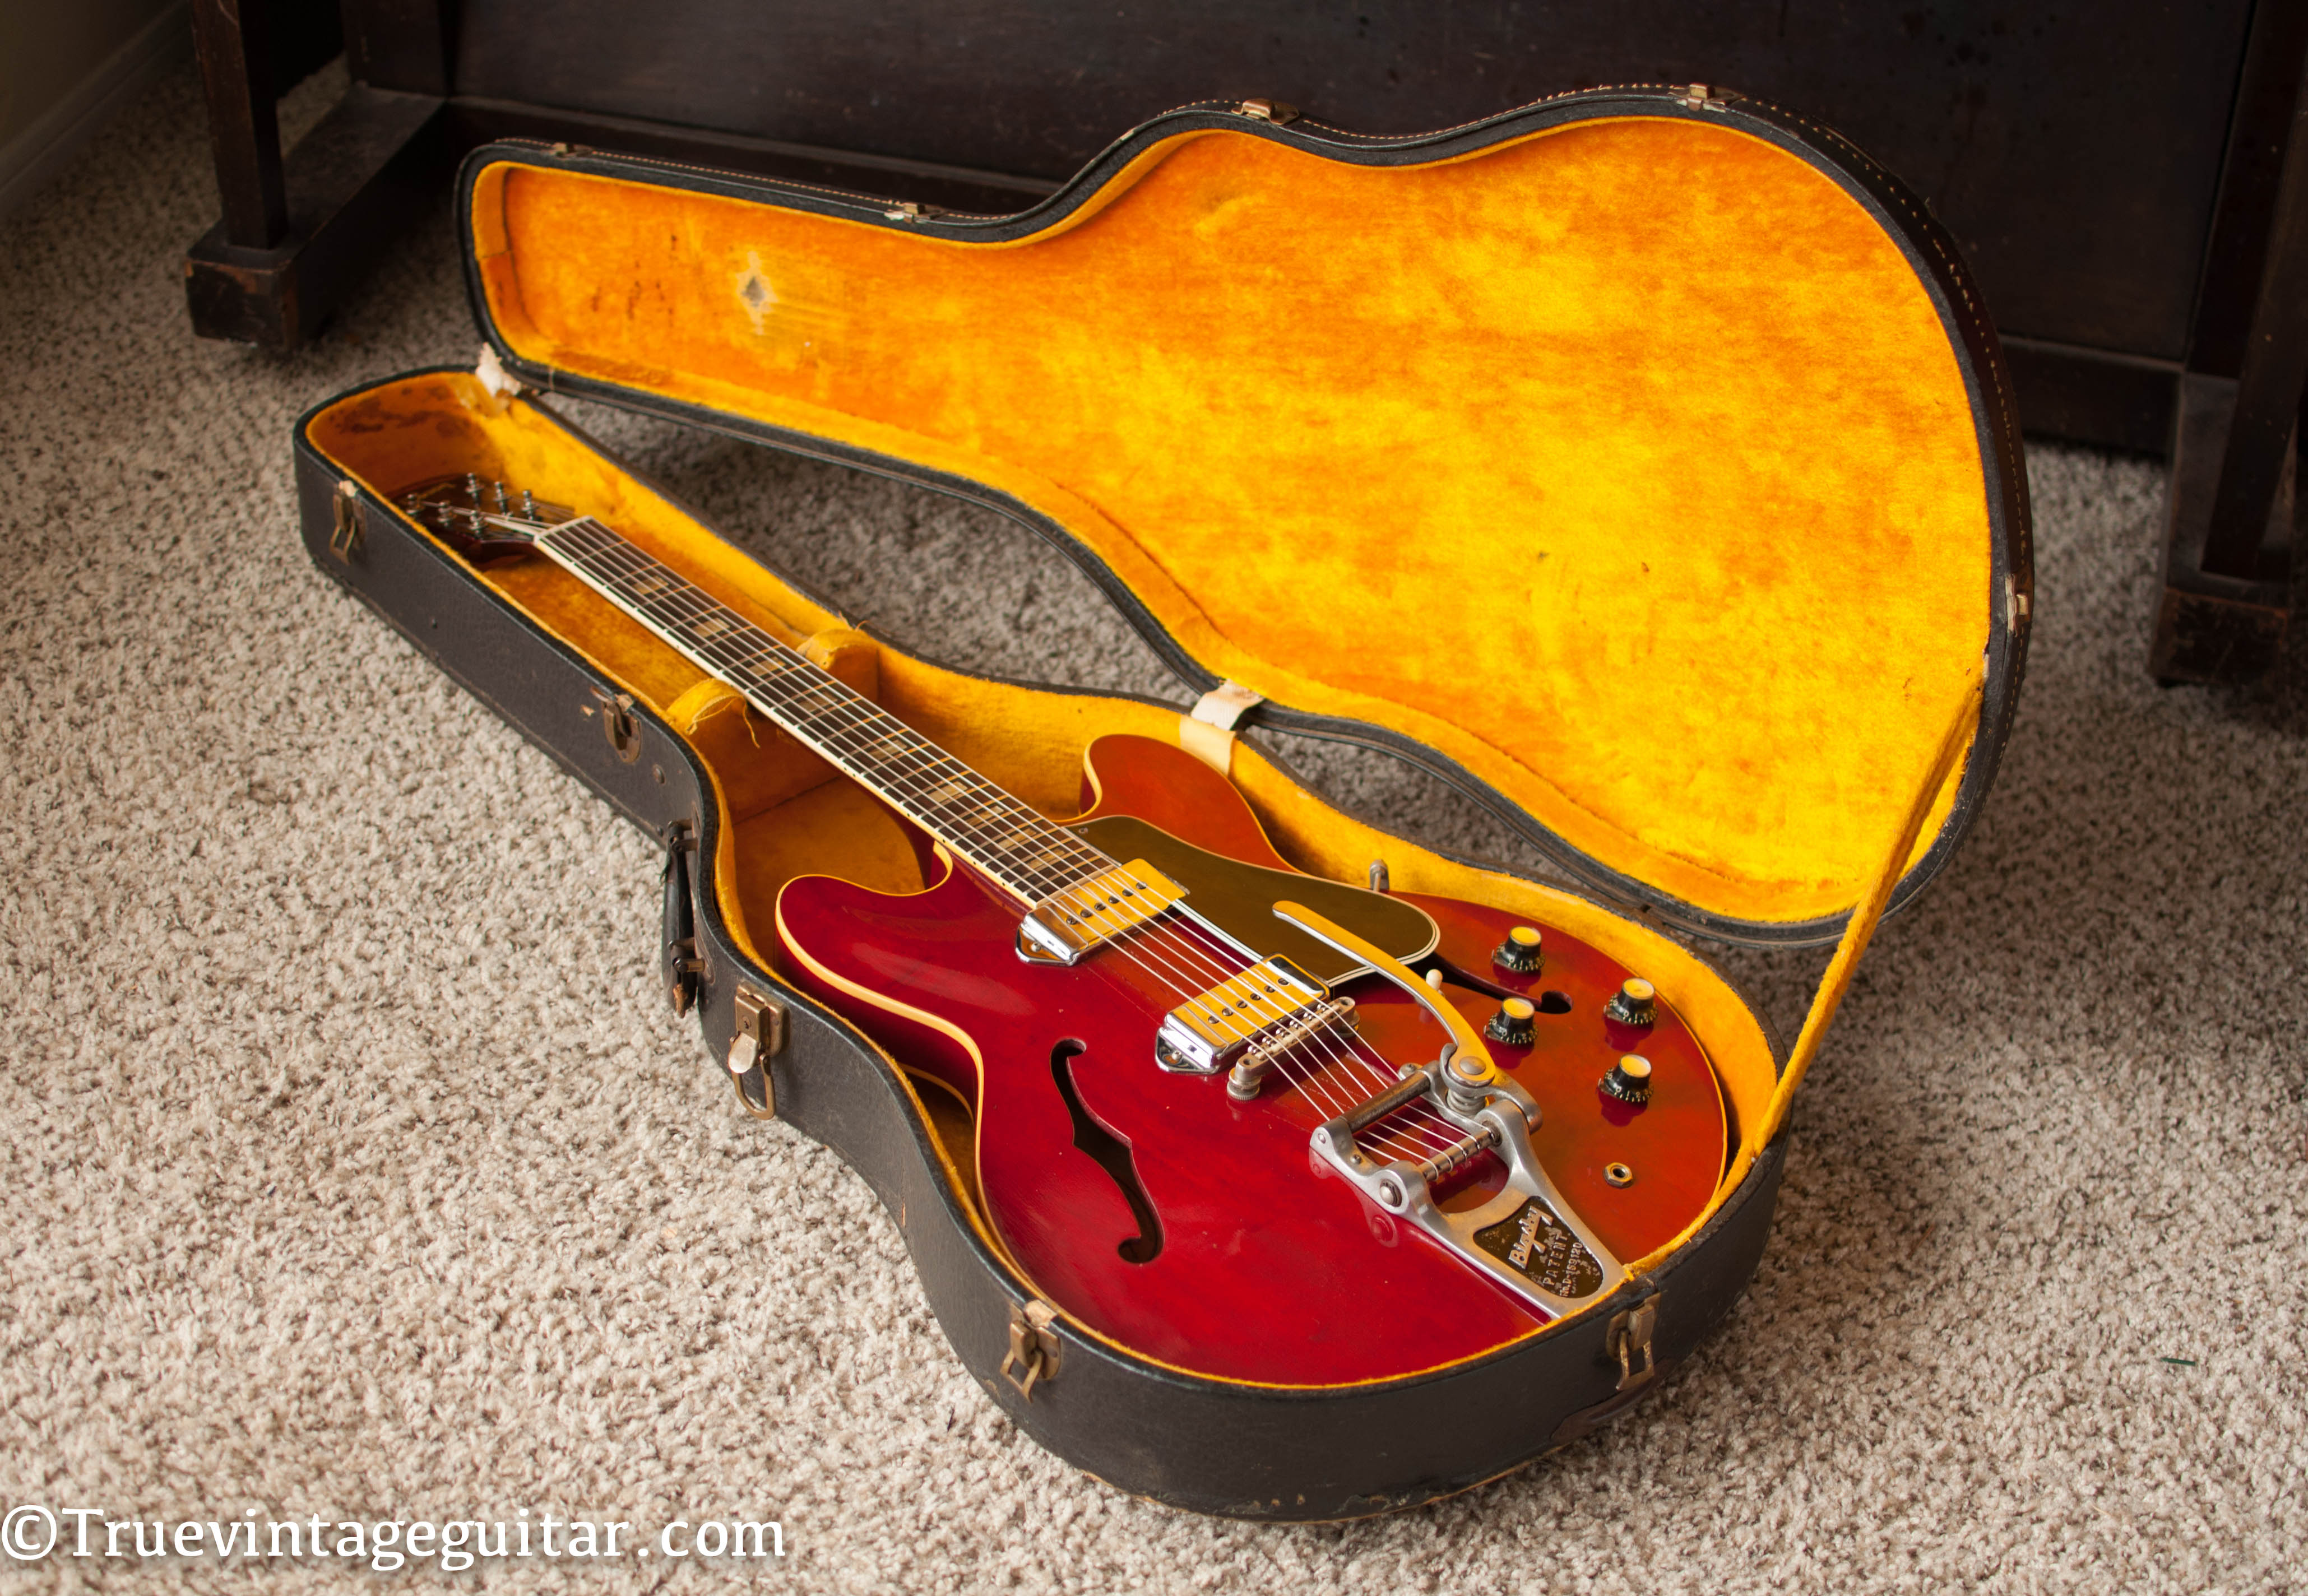 Vintage 1964 Gibson ES-330 red electric guitar